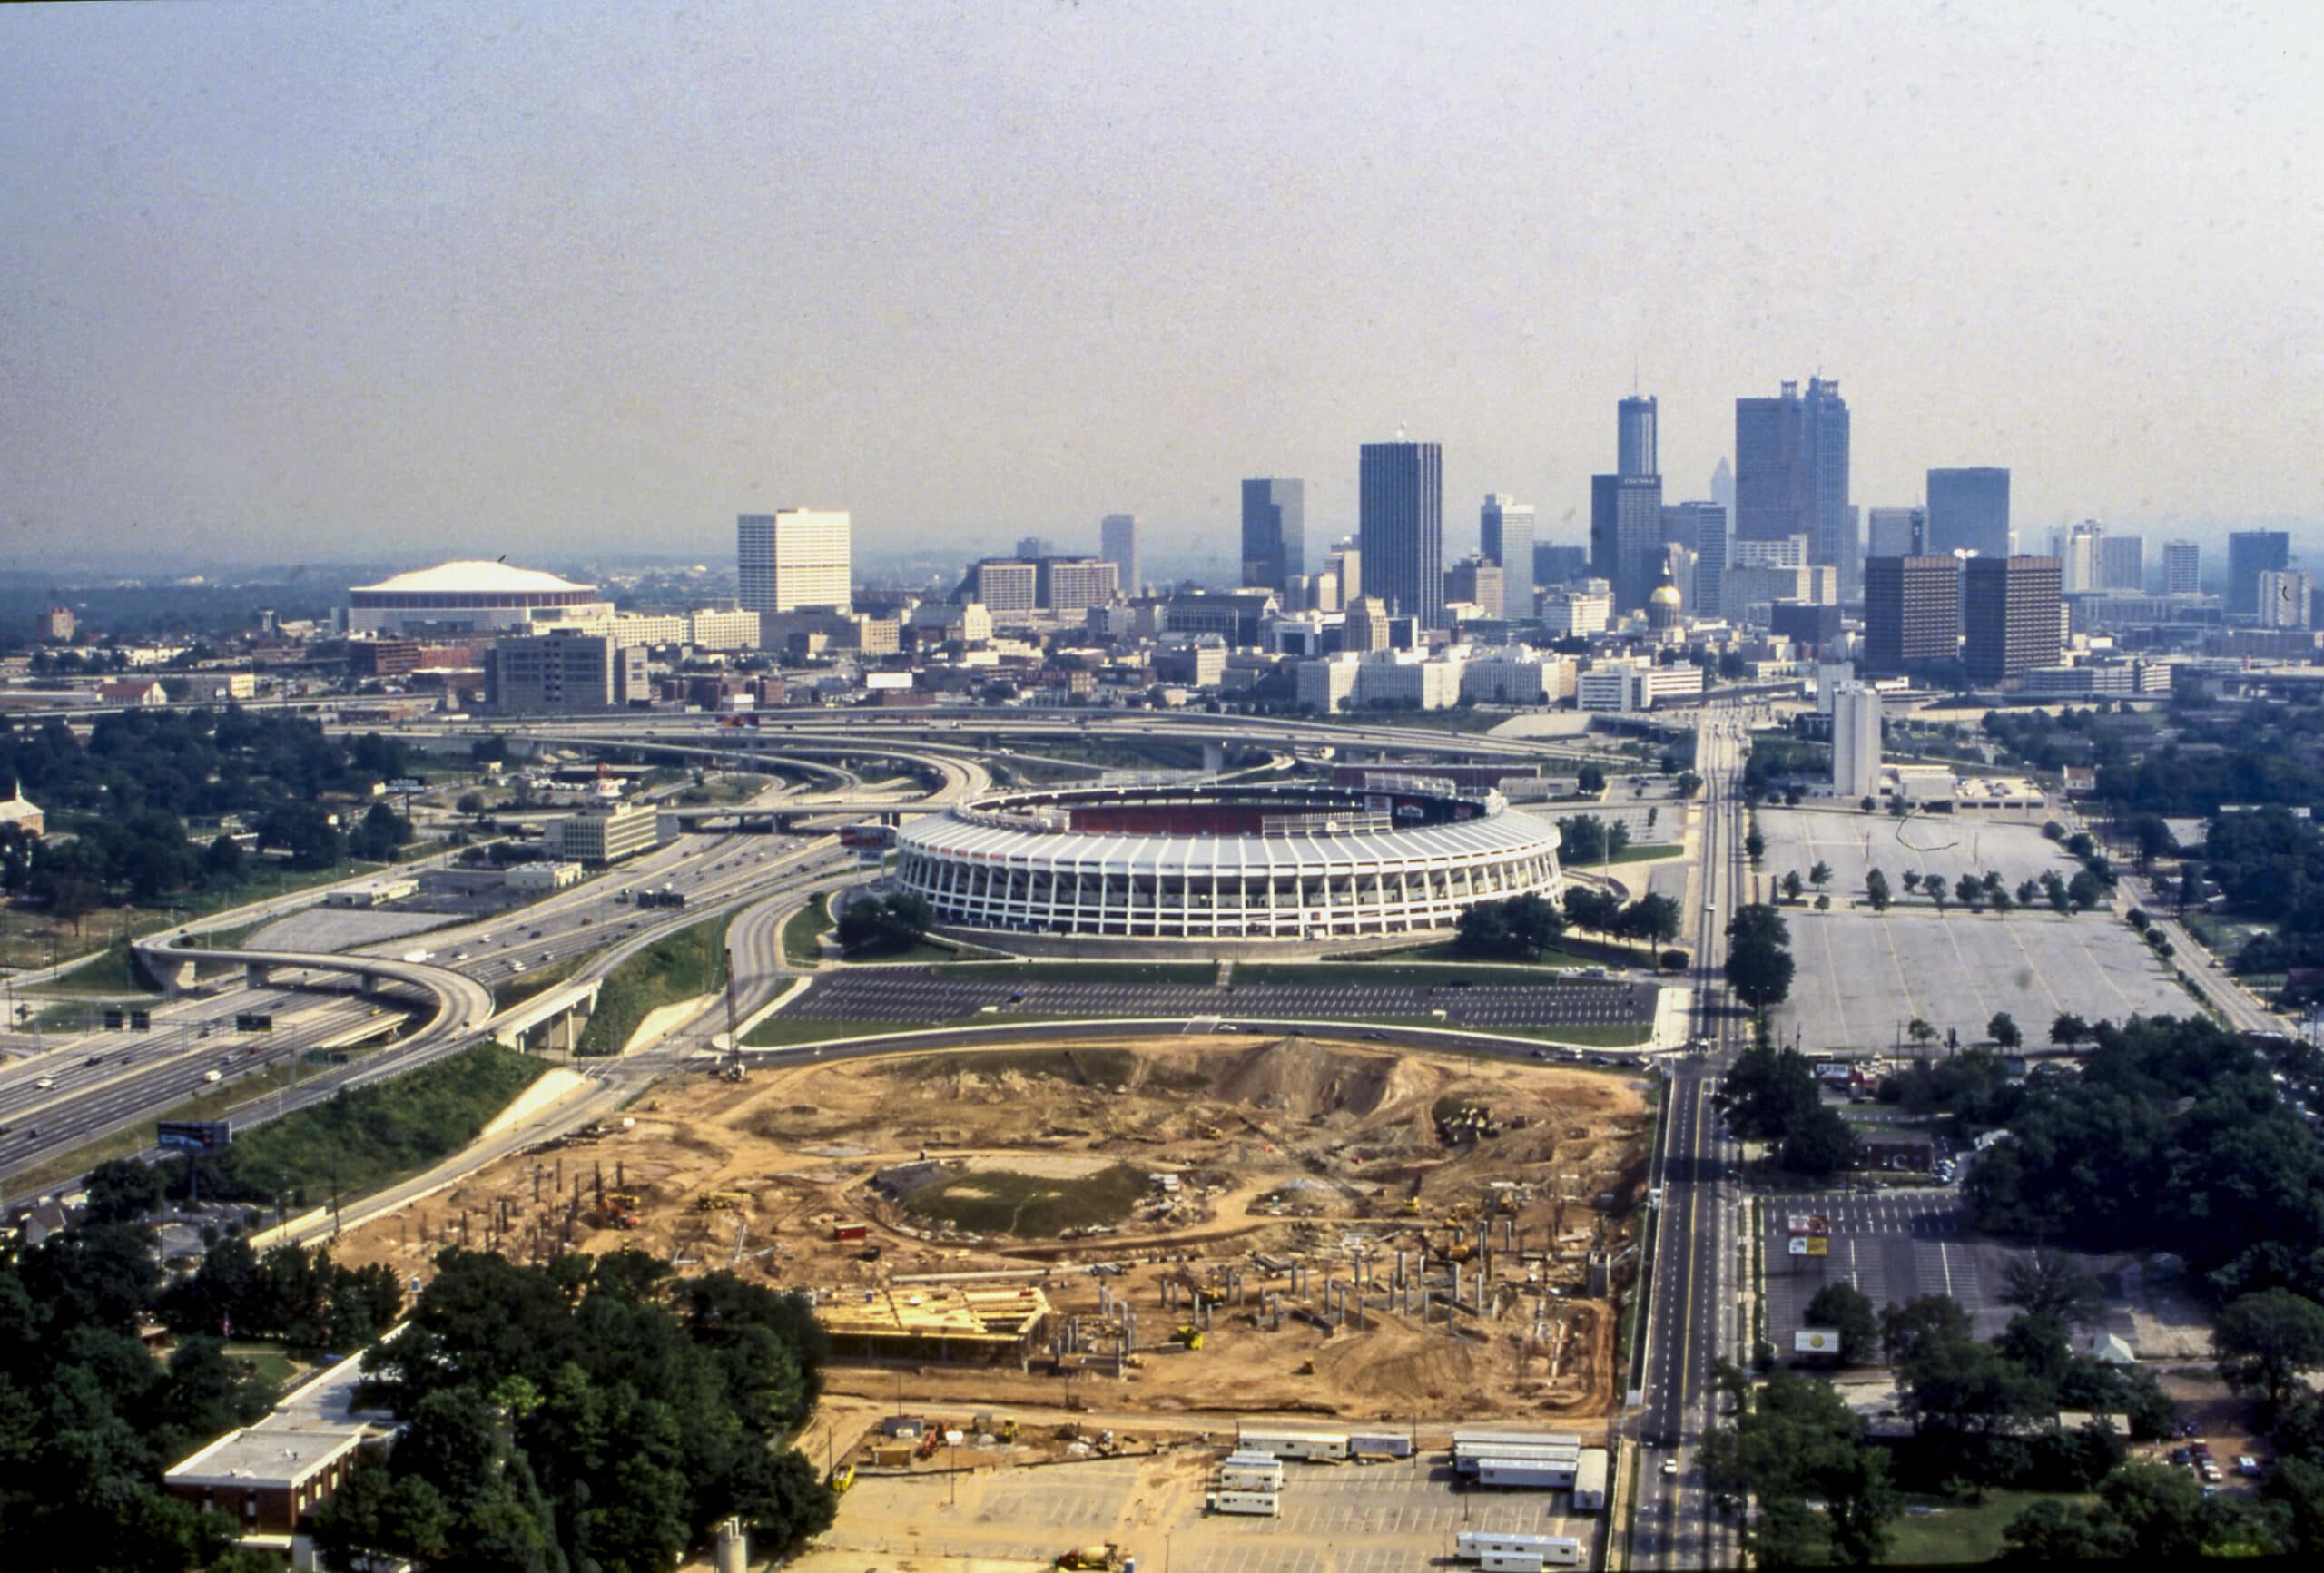 Centennial Olympic Stadium transformed into Turner Field